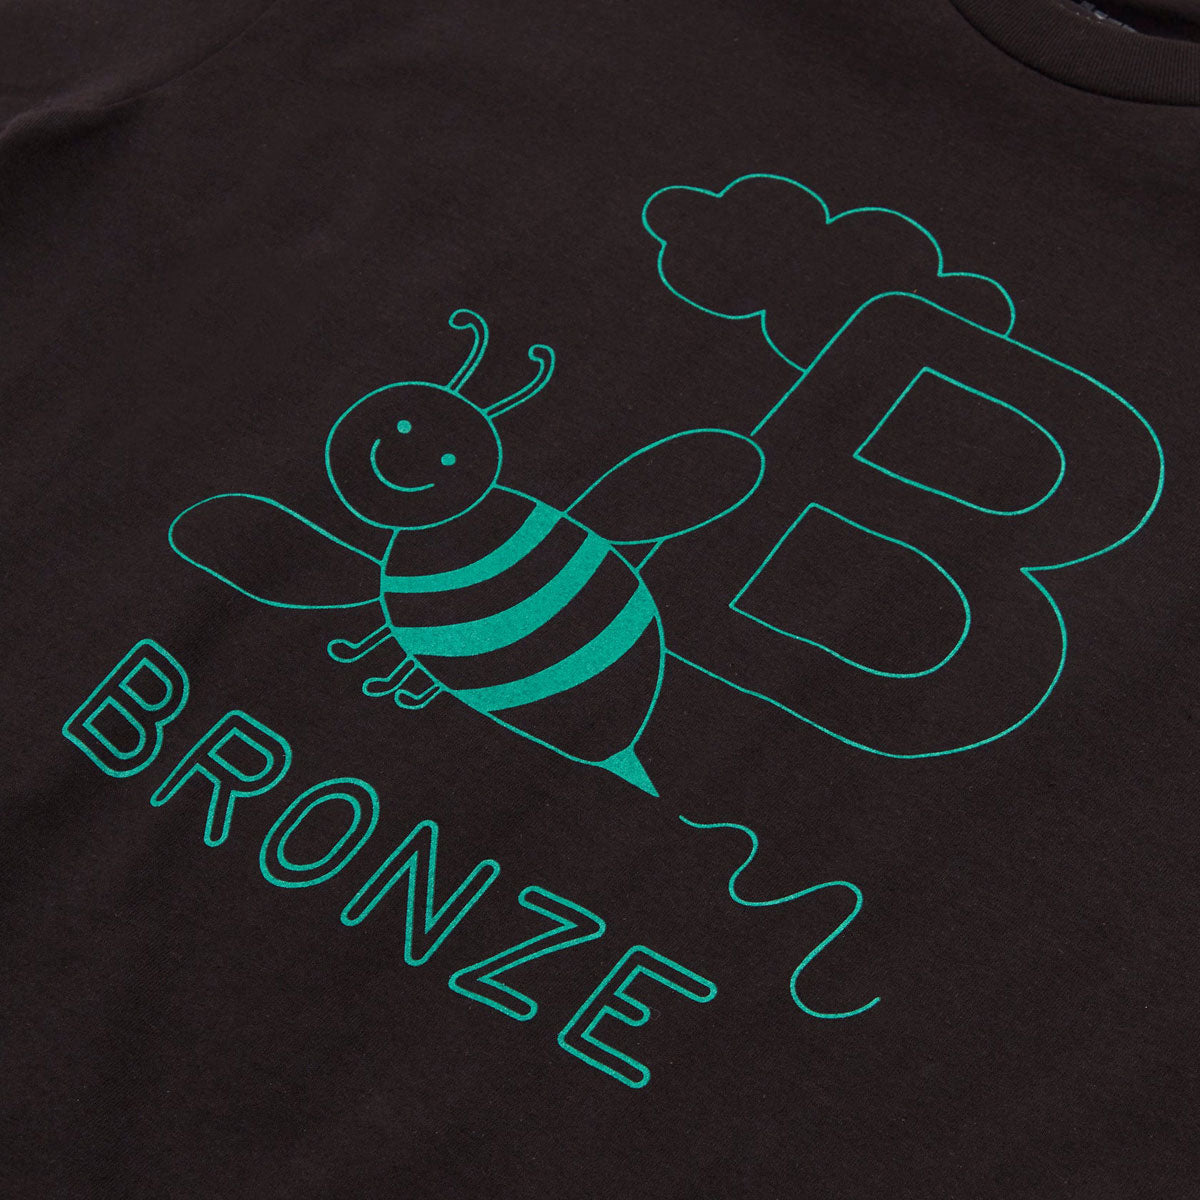 Bronze 56k B Is For Bronze T-Shirt - Black image 2